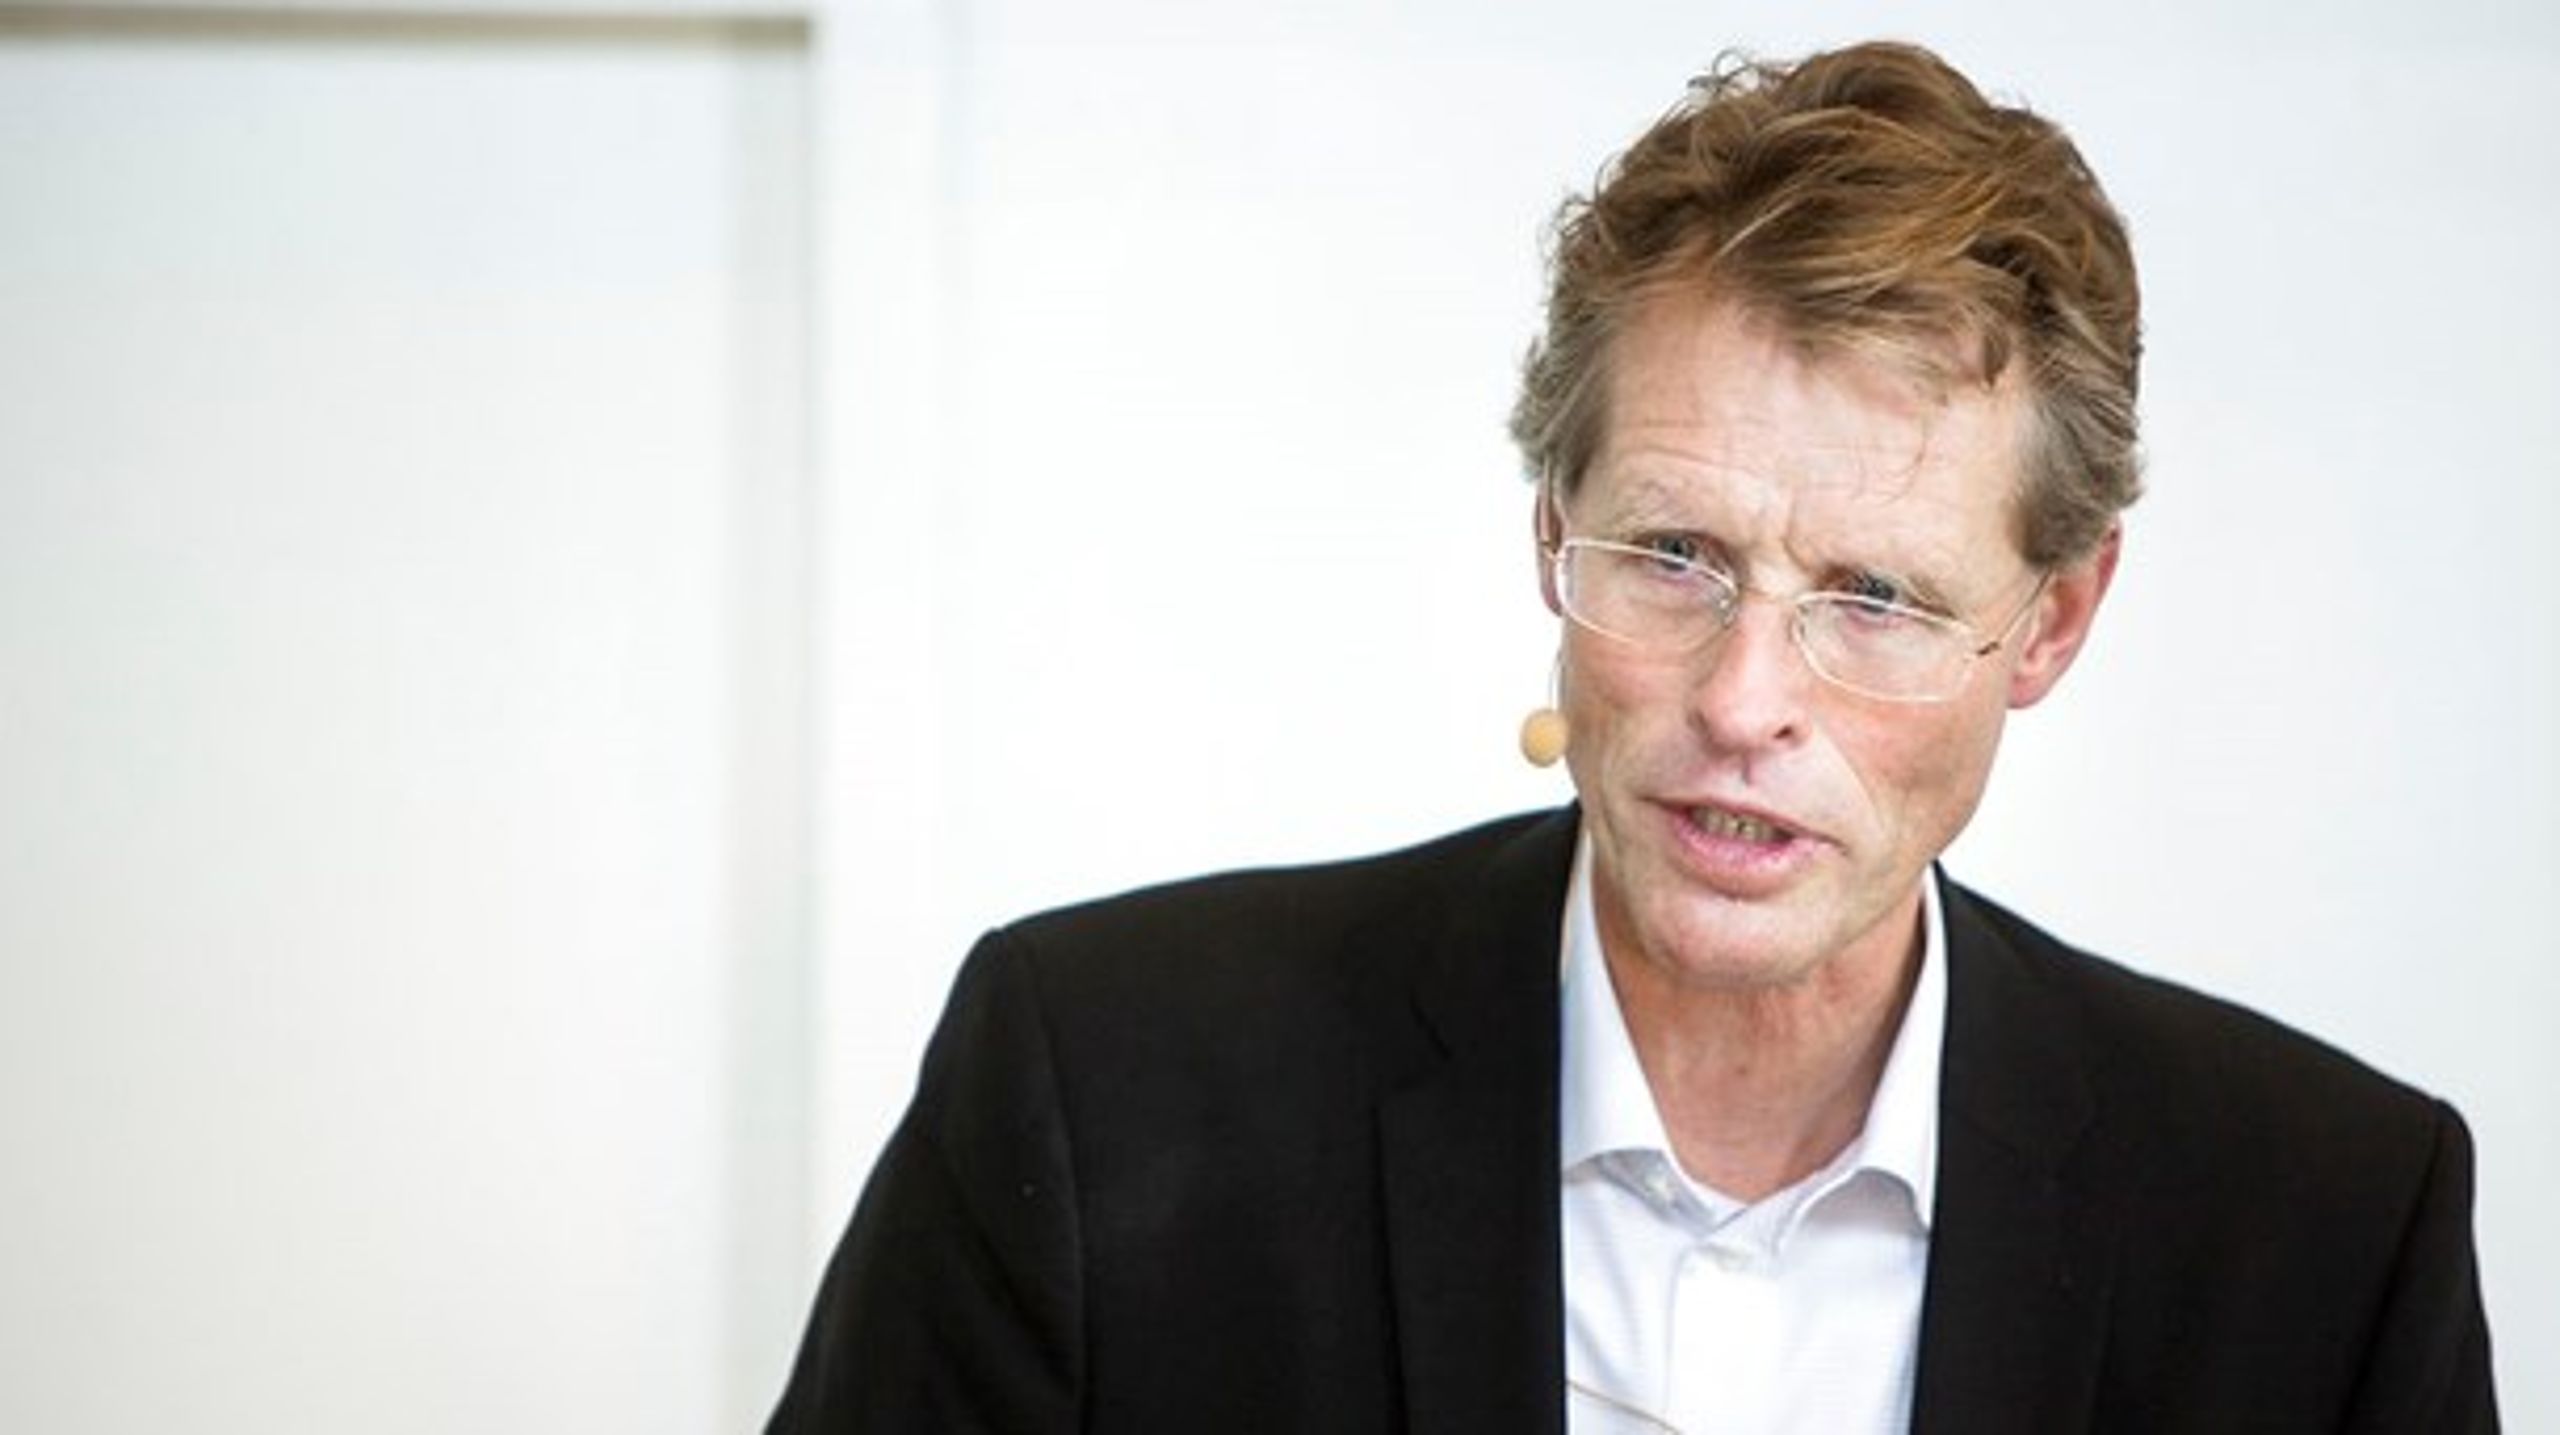 Tidligere chefredaktør Bo Lidegaard er blandt navnene i Tænketanken Frejs nye bestyrelse.